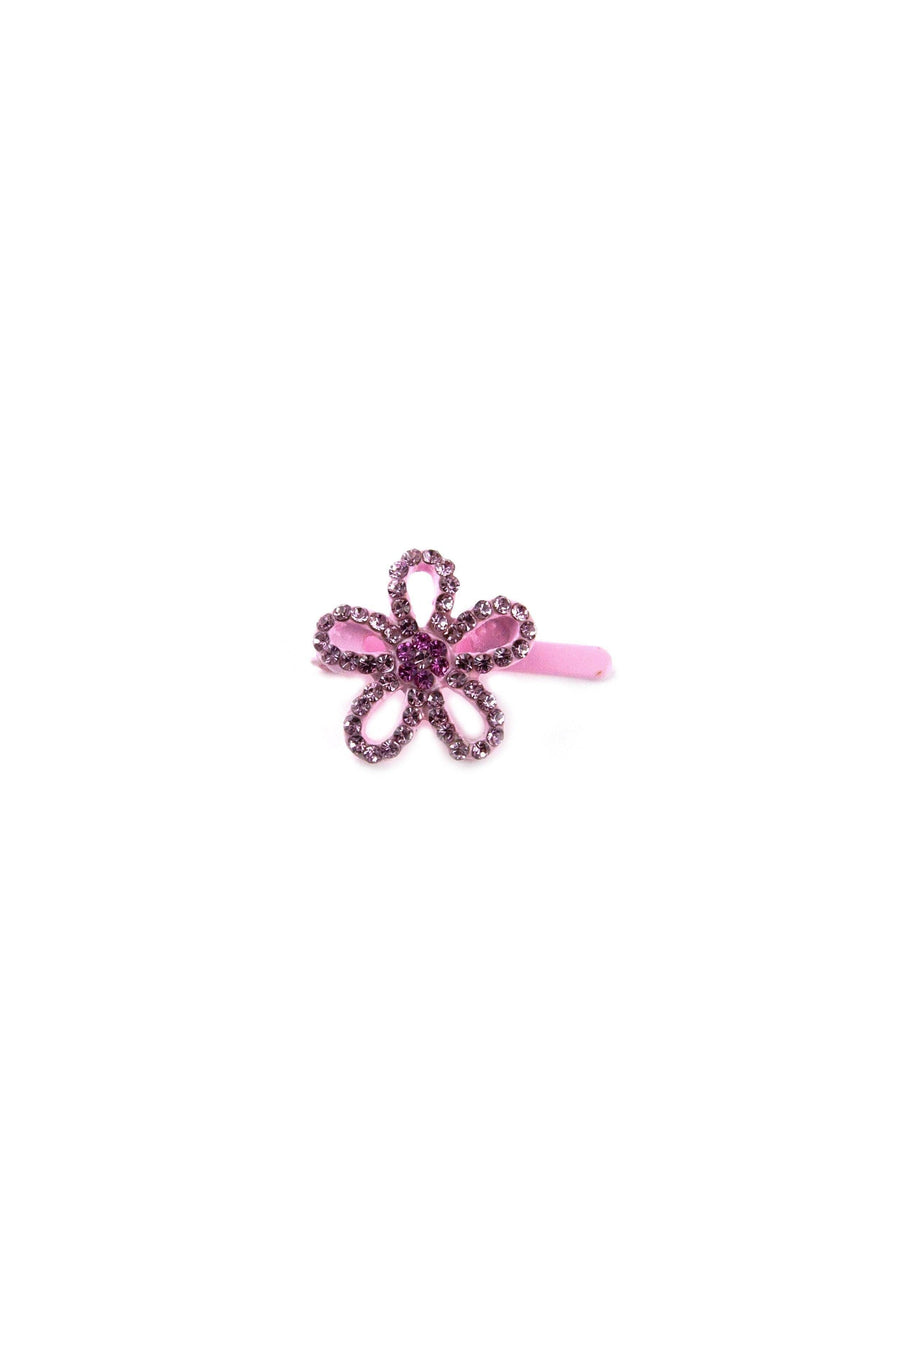 Soho Style Barrette Pink Mini Flower Barrette